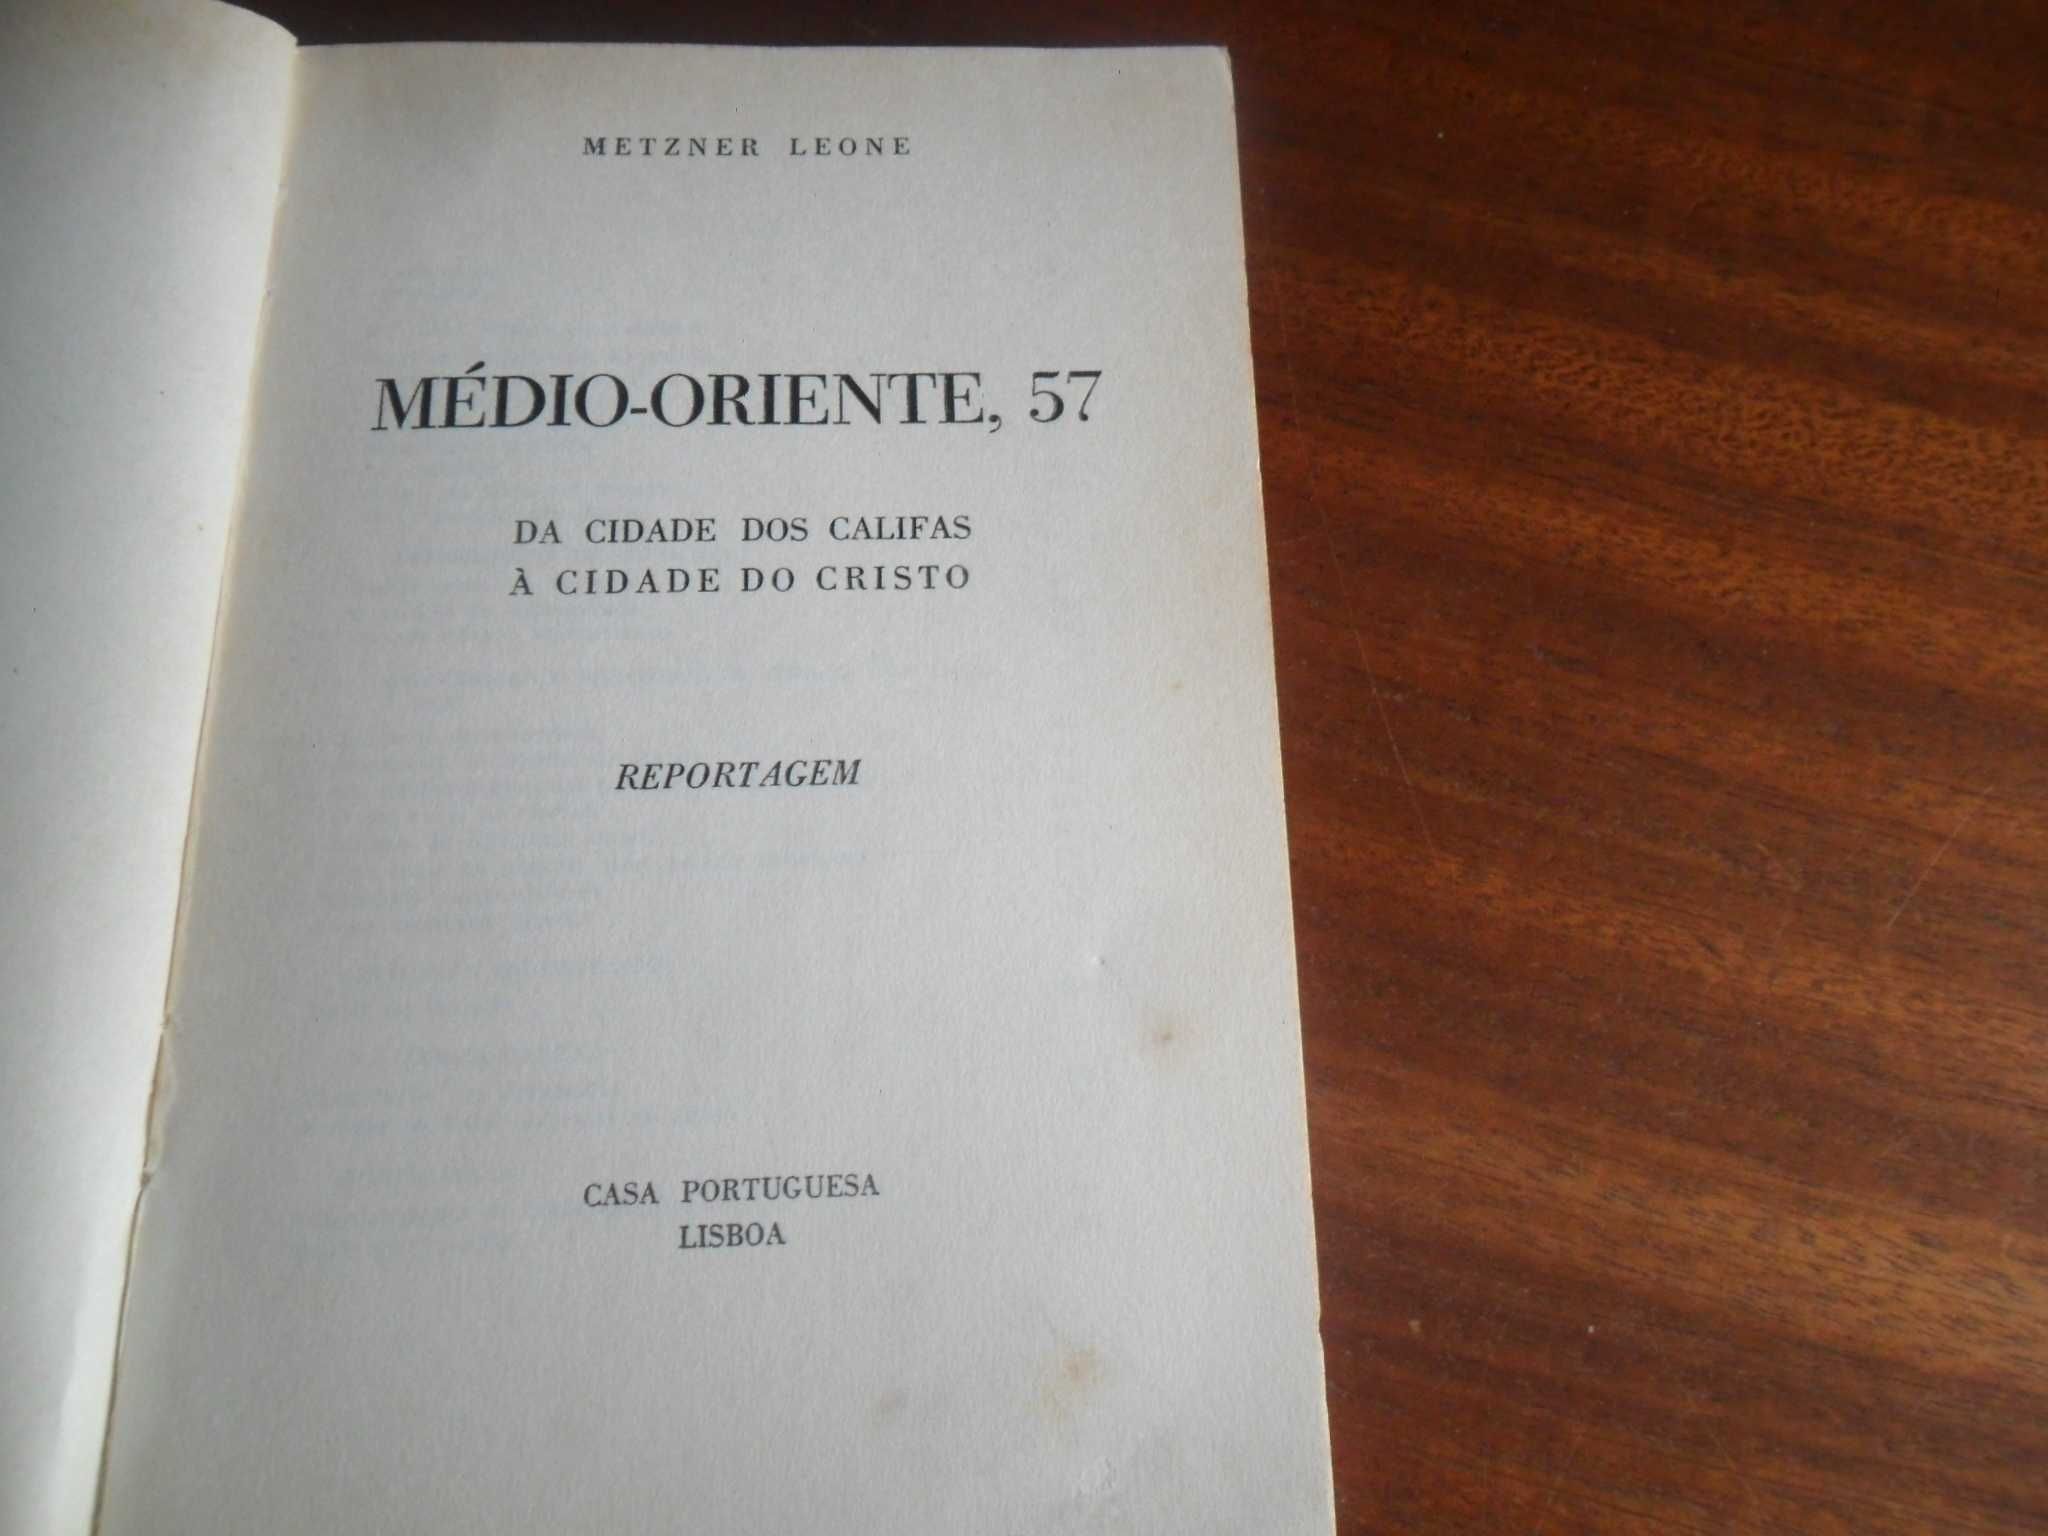 "Médio-Oriente, 57" de Metzner Leone - 1ª Edição de 1957